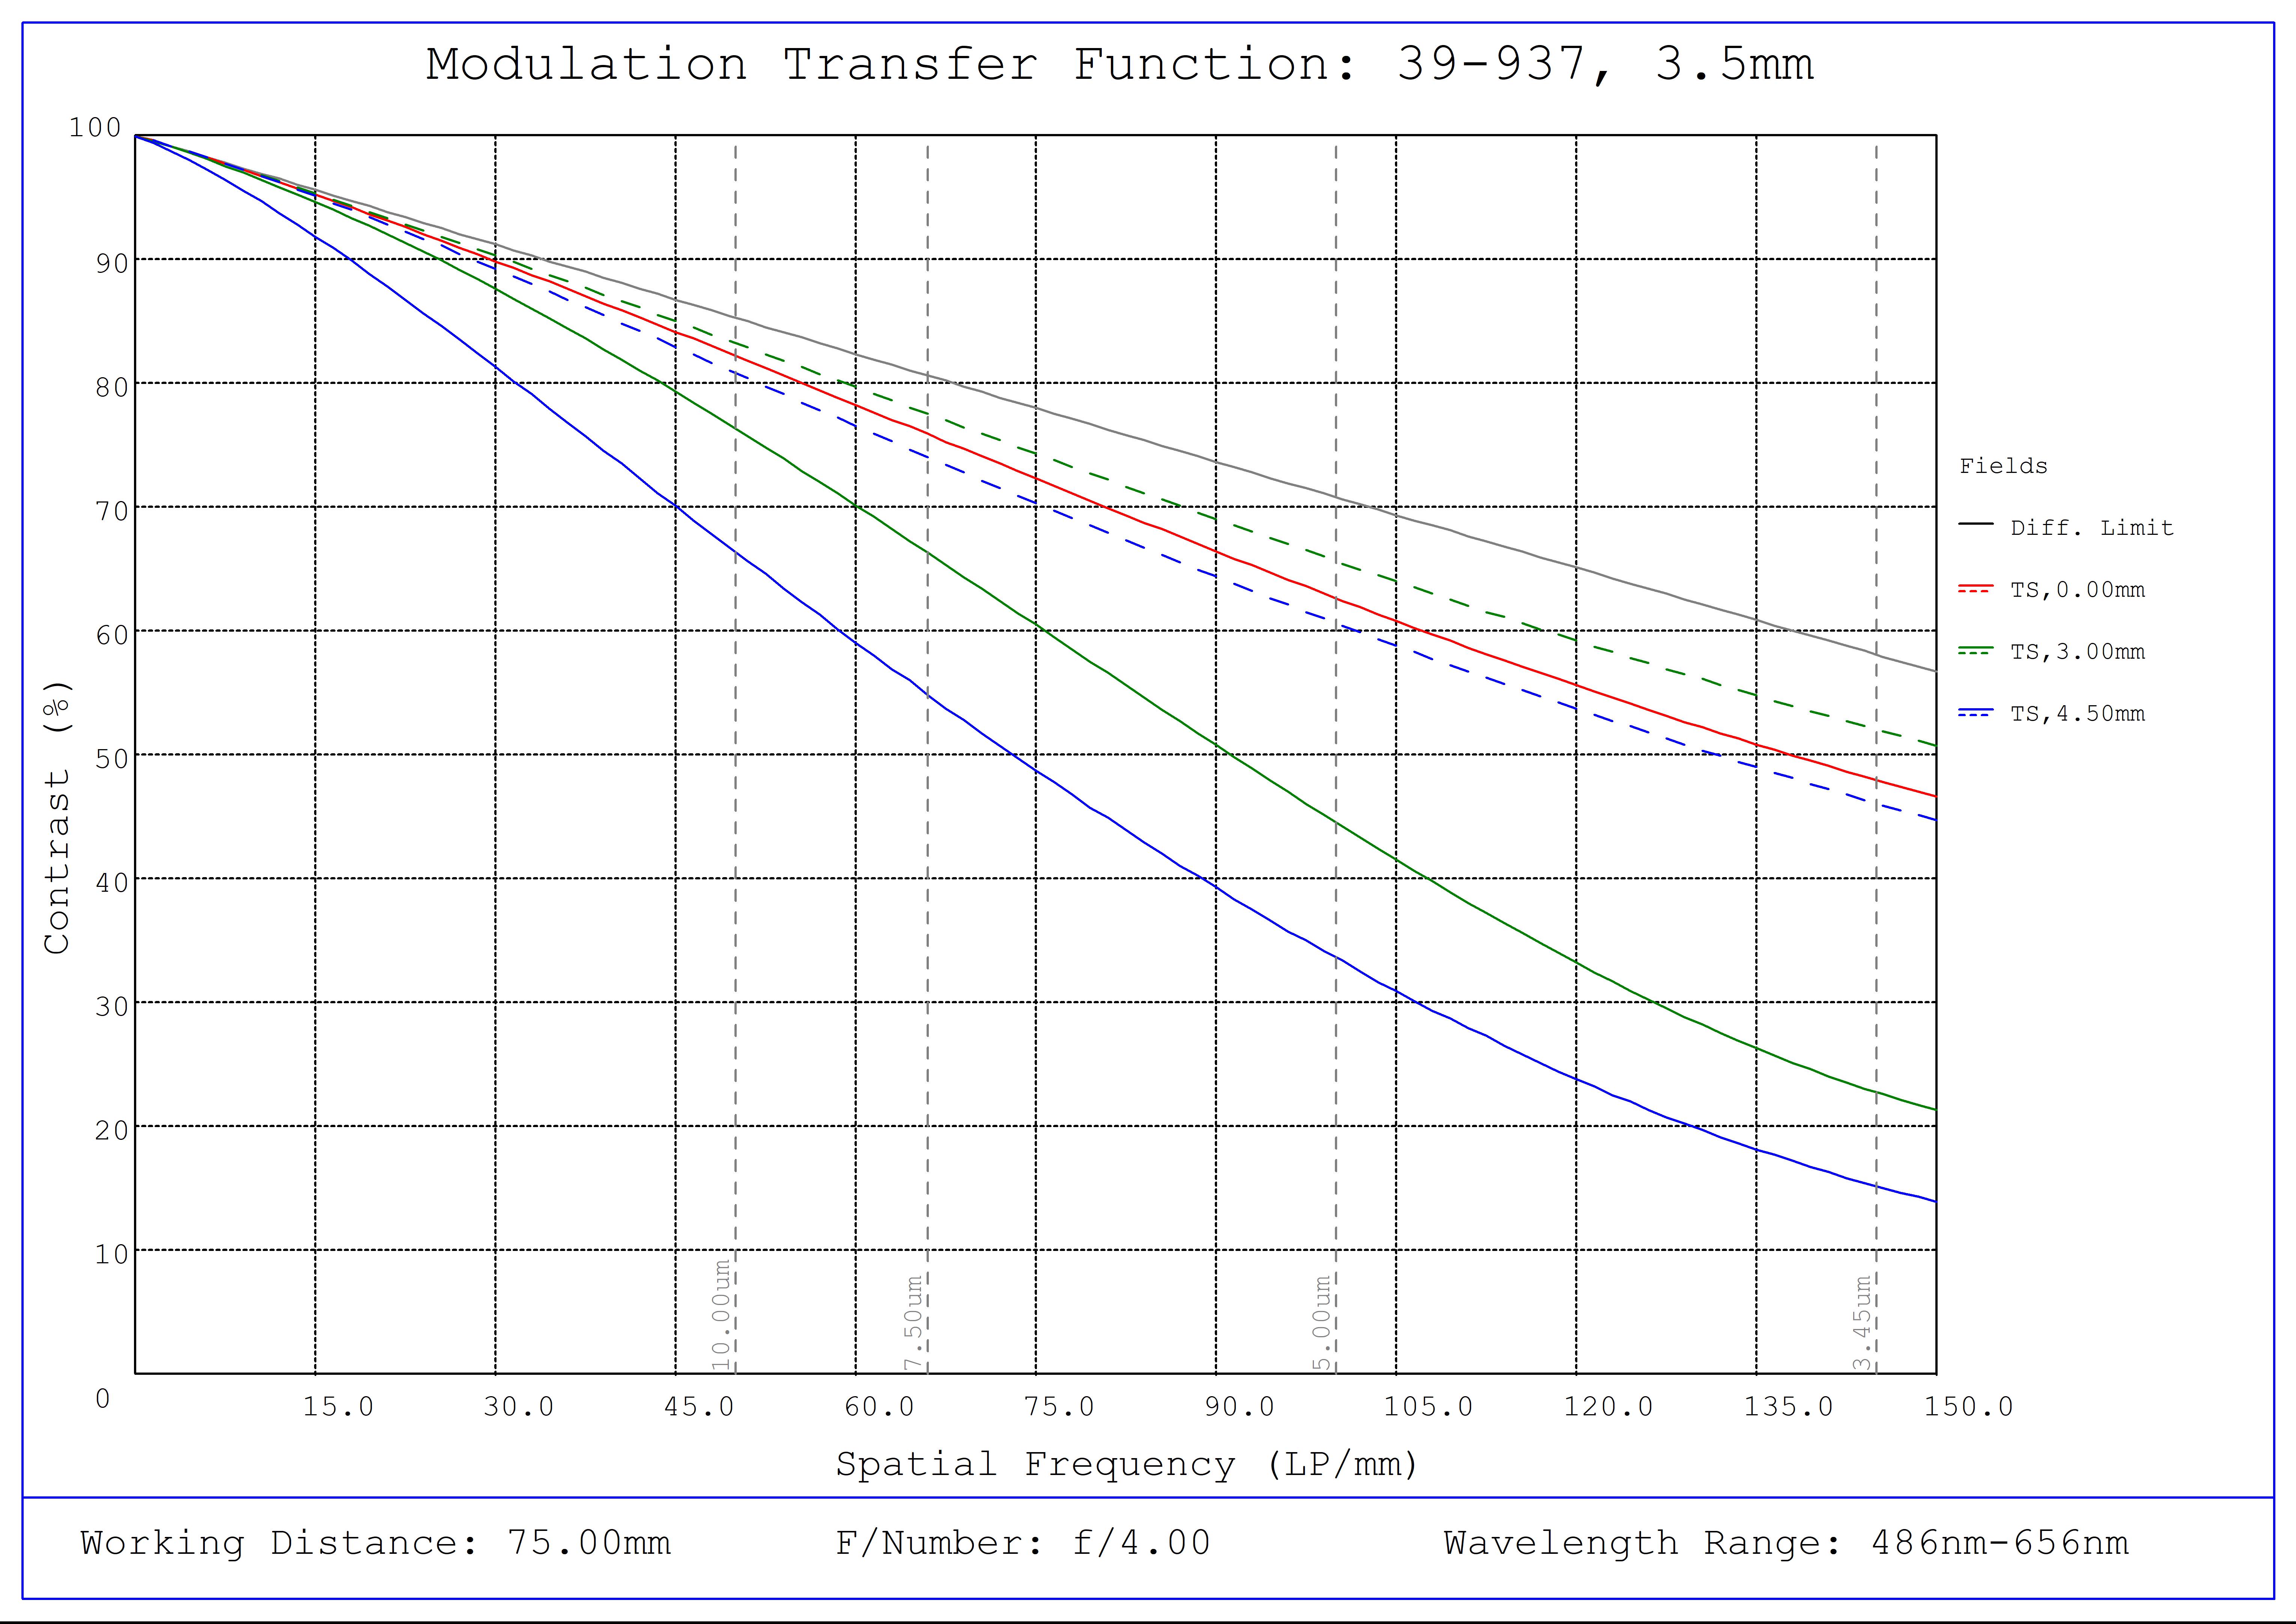 #39-937, 3.5mm C VIS-NIR Series Fixed Focal Length Lens, Modulated Transfer Function (MTF) Plot, 75mm Working Distance, f4